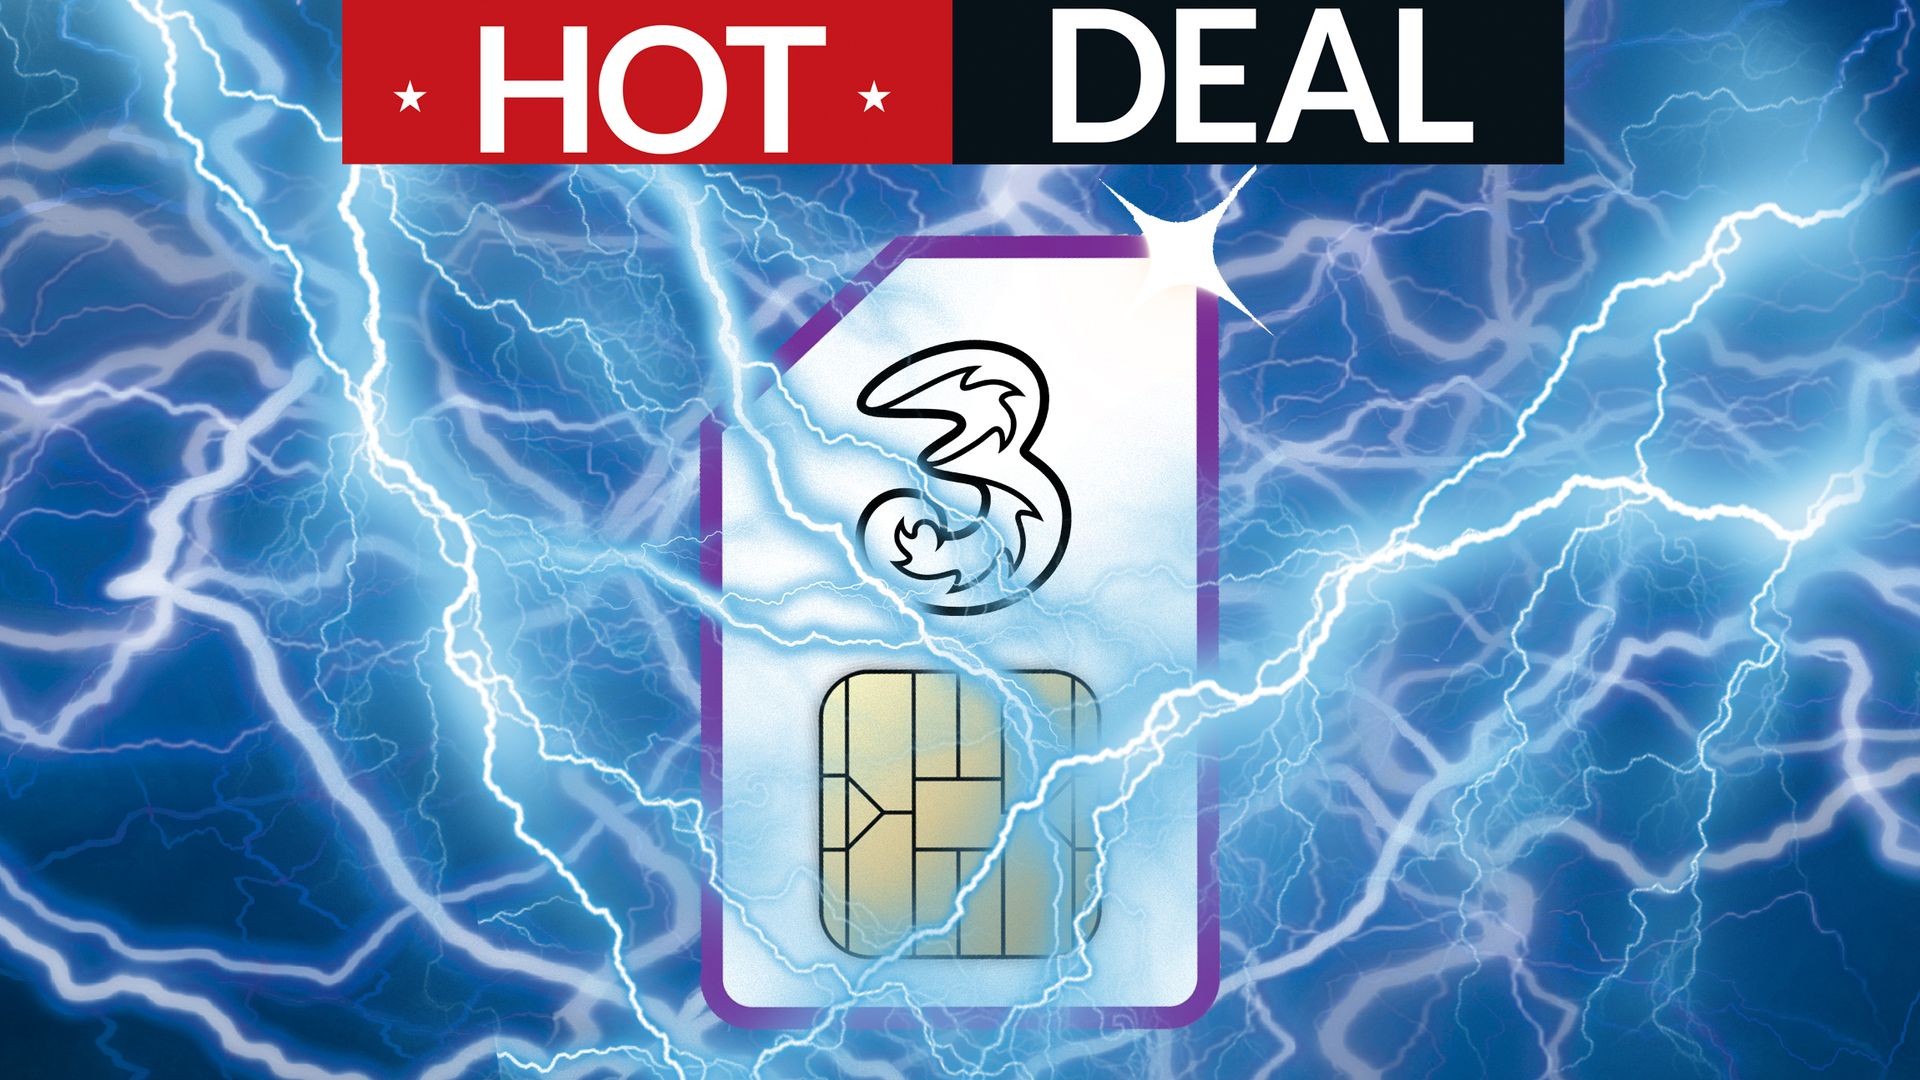 Only deals